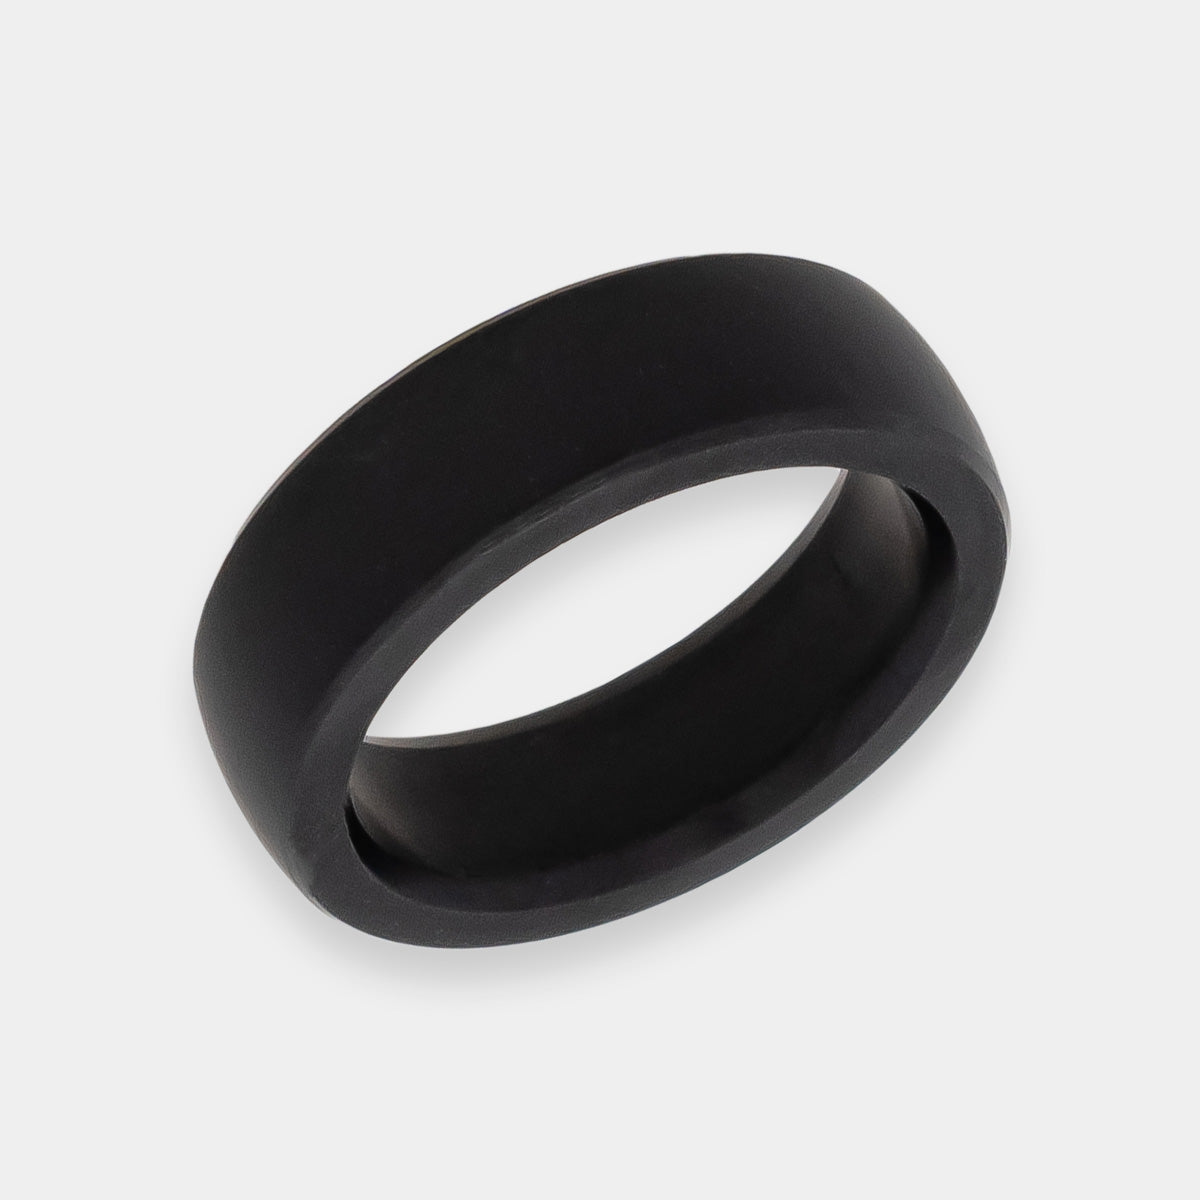 Solid Black Diamond 6mm Men's Wedding Ring on White Background | Elysium Black Diamond Ring - NYX 6mm - Solid Black Diamond Ring | Products | Image 1